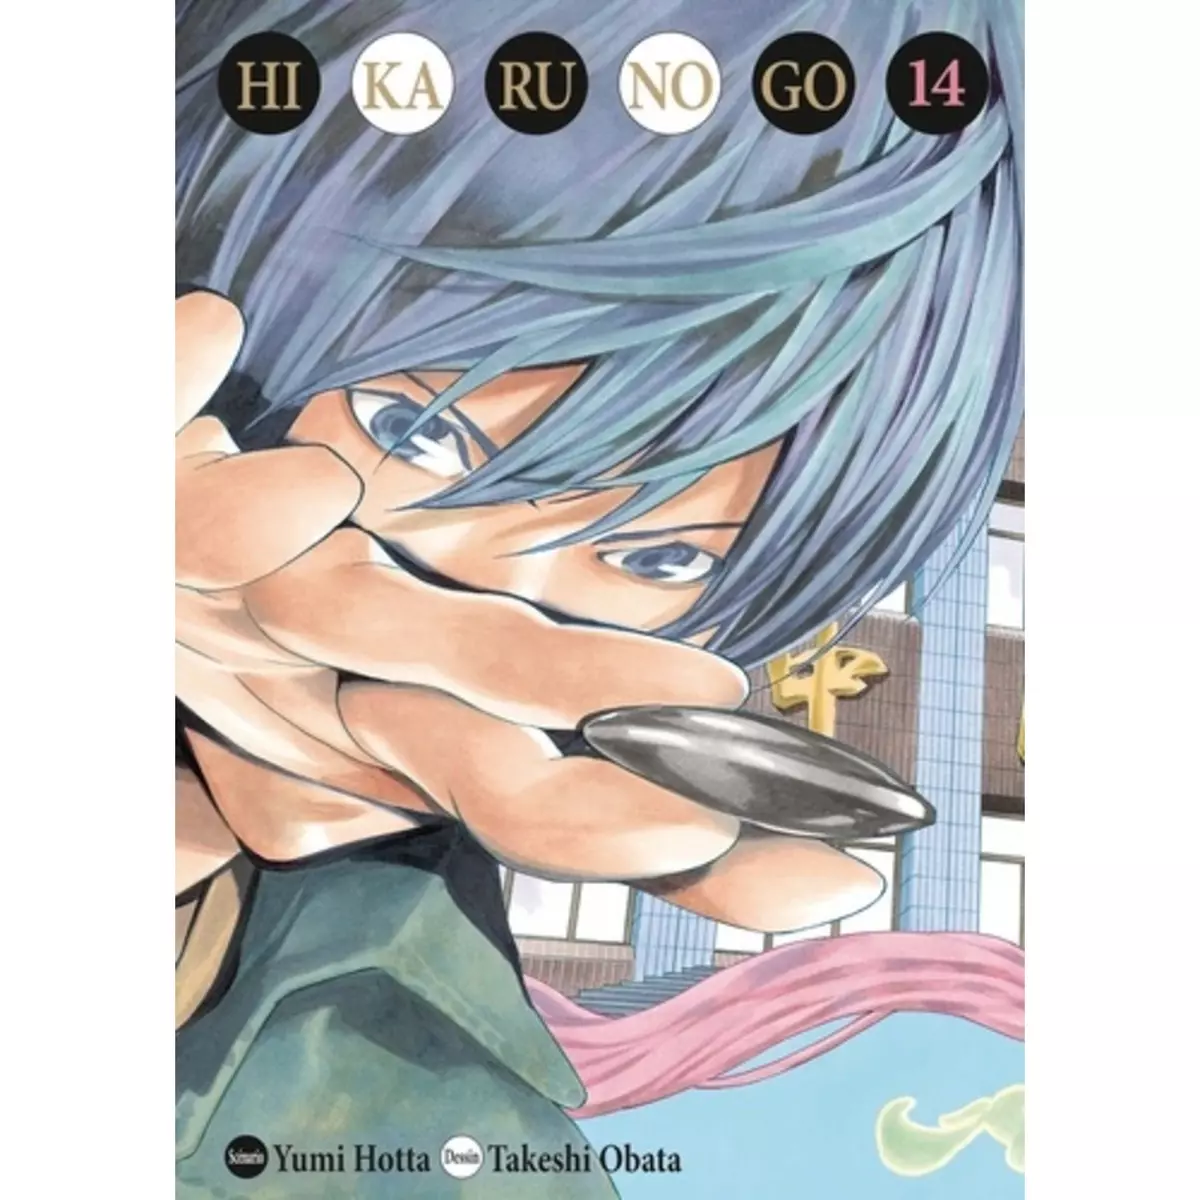  HIKARU NO GO TOME 14 . EDITION DE LUXE, Hotta Yumi